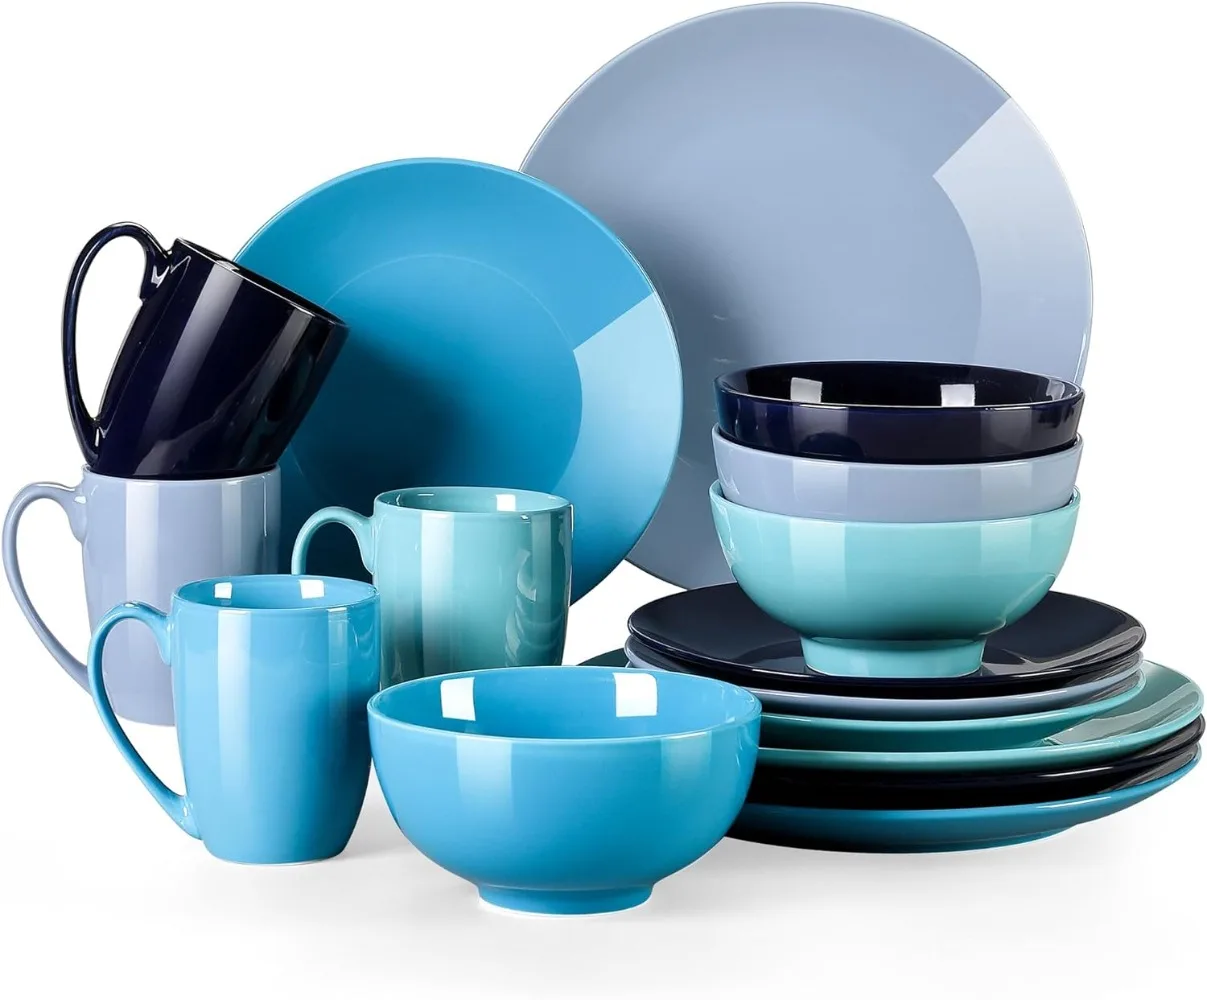 

LOVECASA Porcelain Dinnerware Sets for 4, 16 Pieces Plates and Bowls Sets, Multi Blue Dishes Set, Ceramic Dinner Sets Kitchen